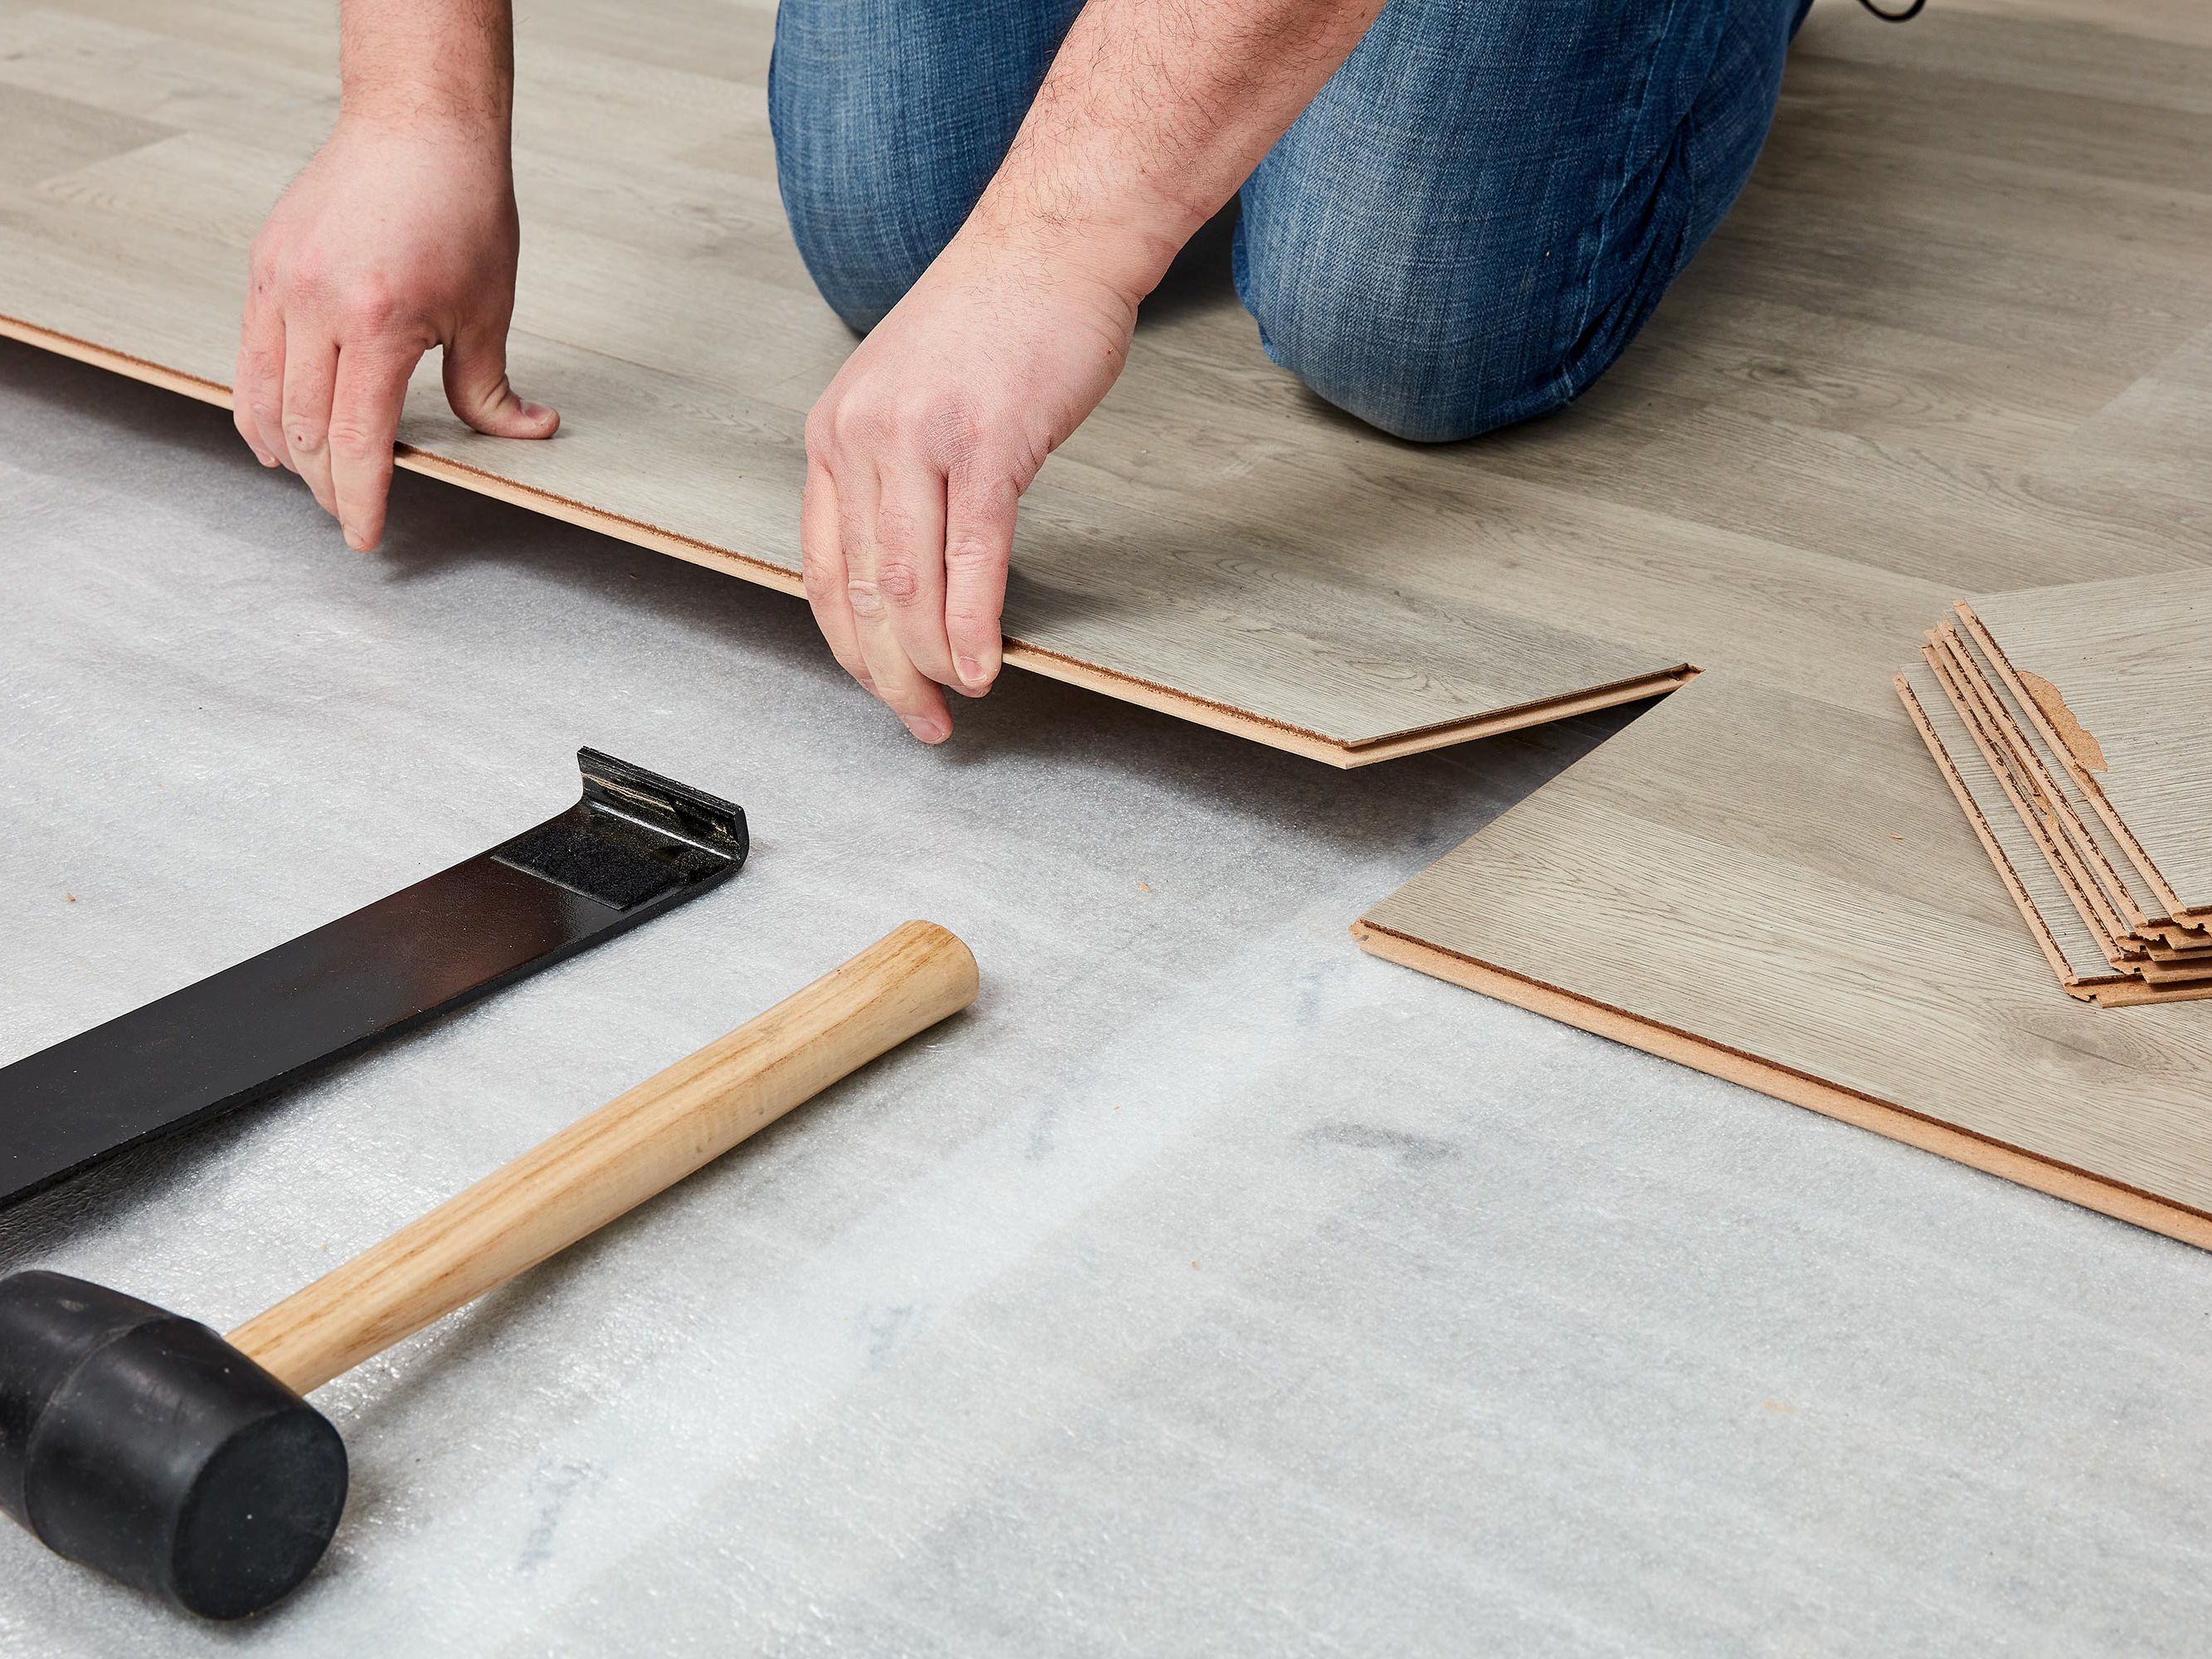 How to install Laminate Flooring